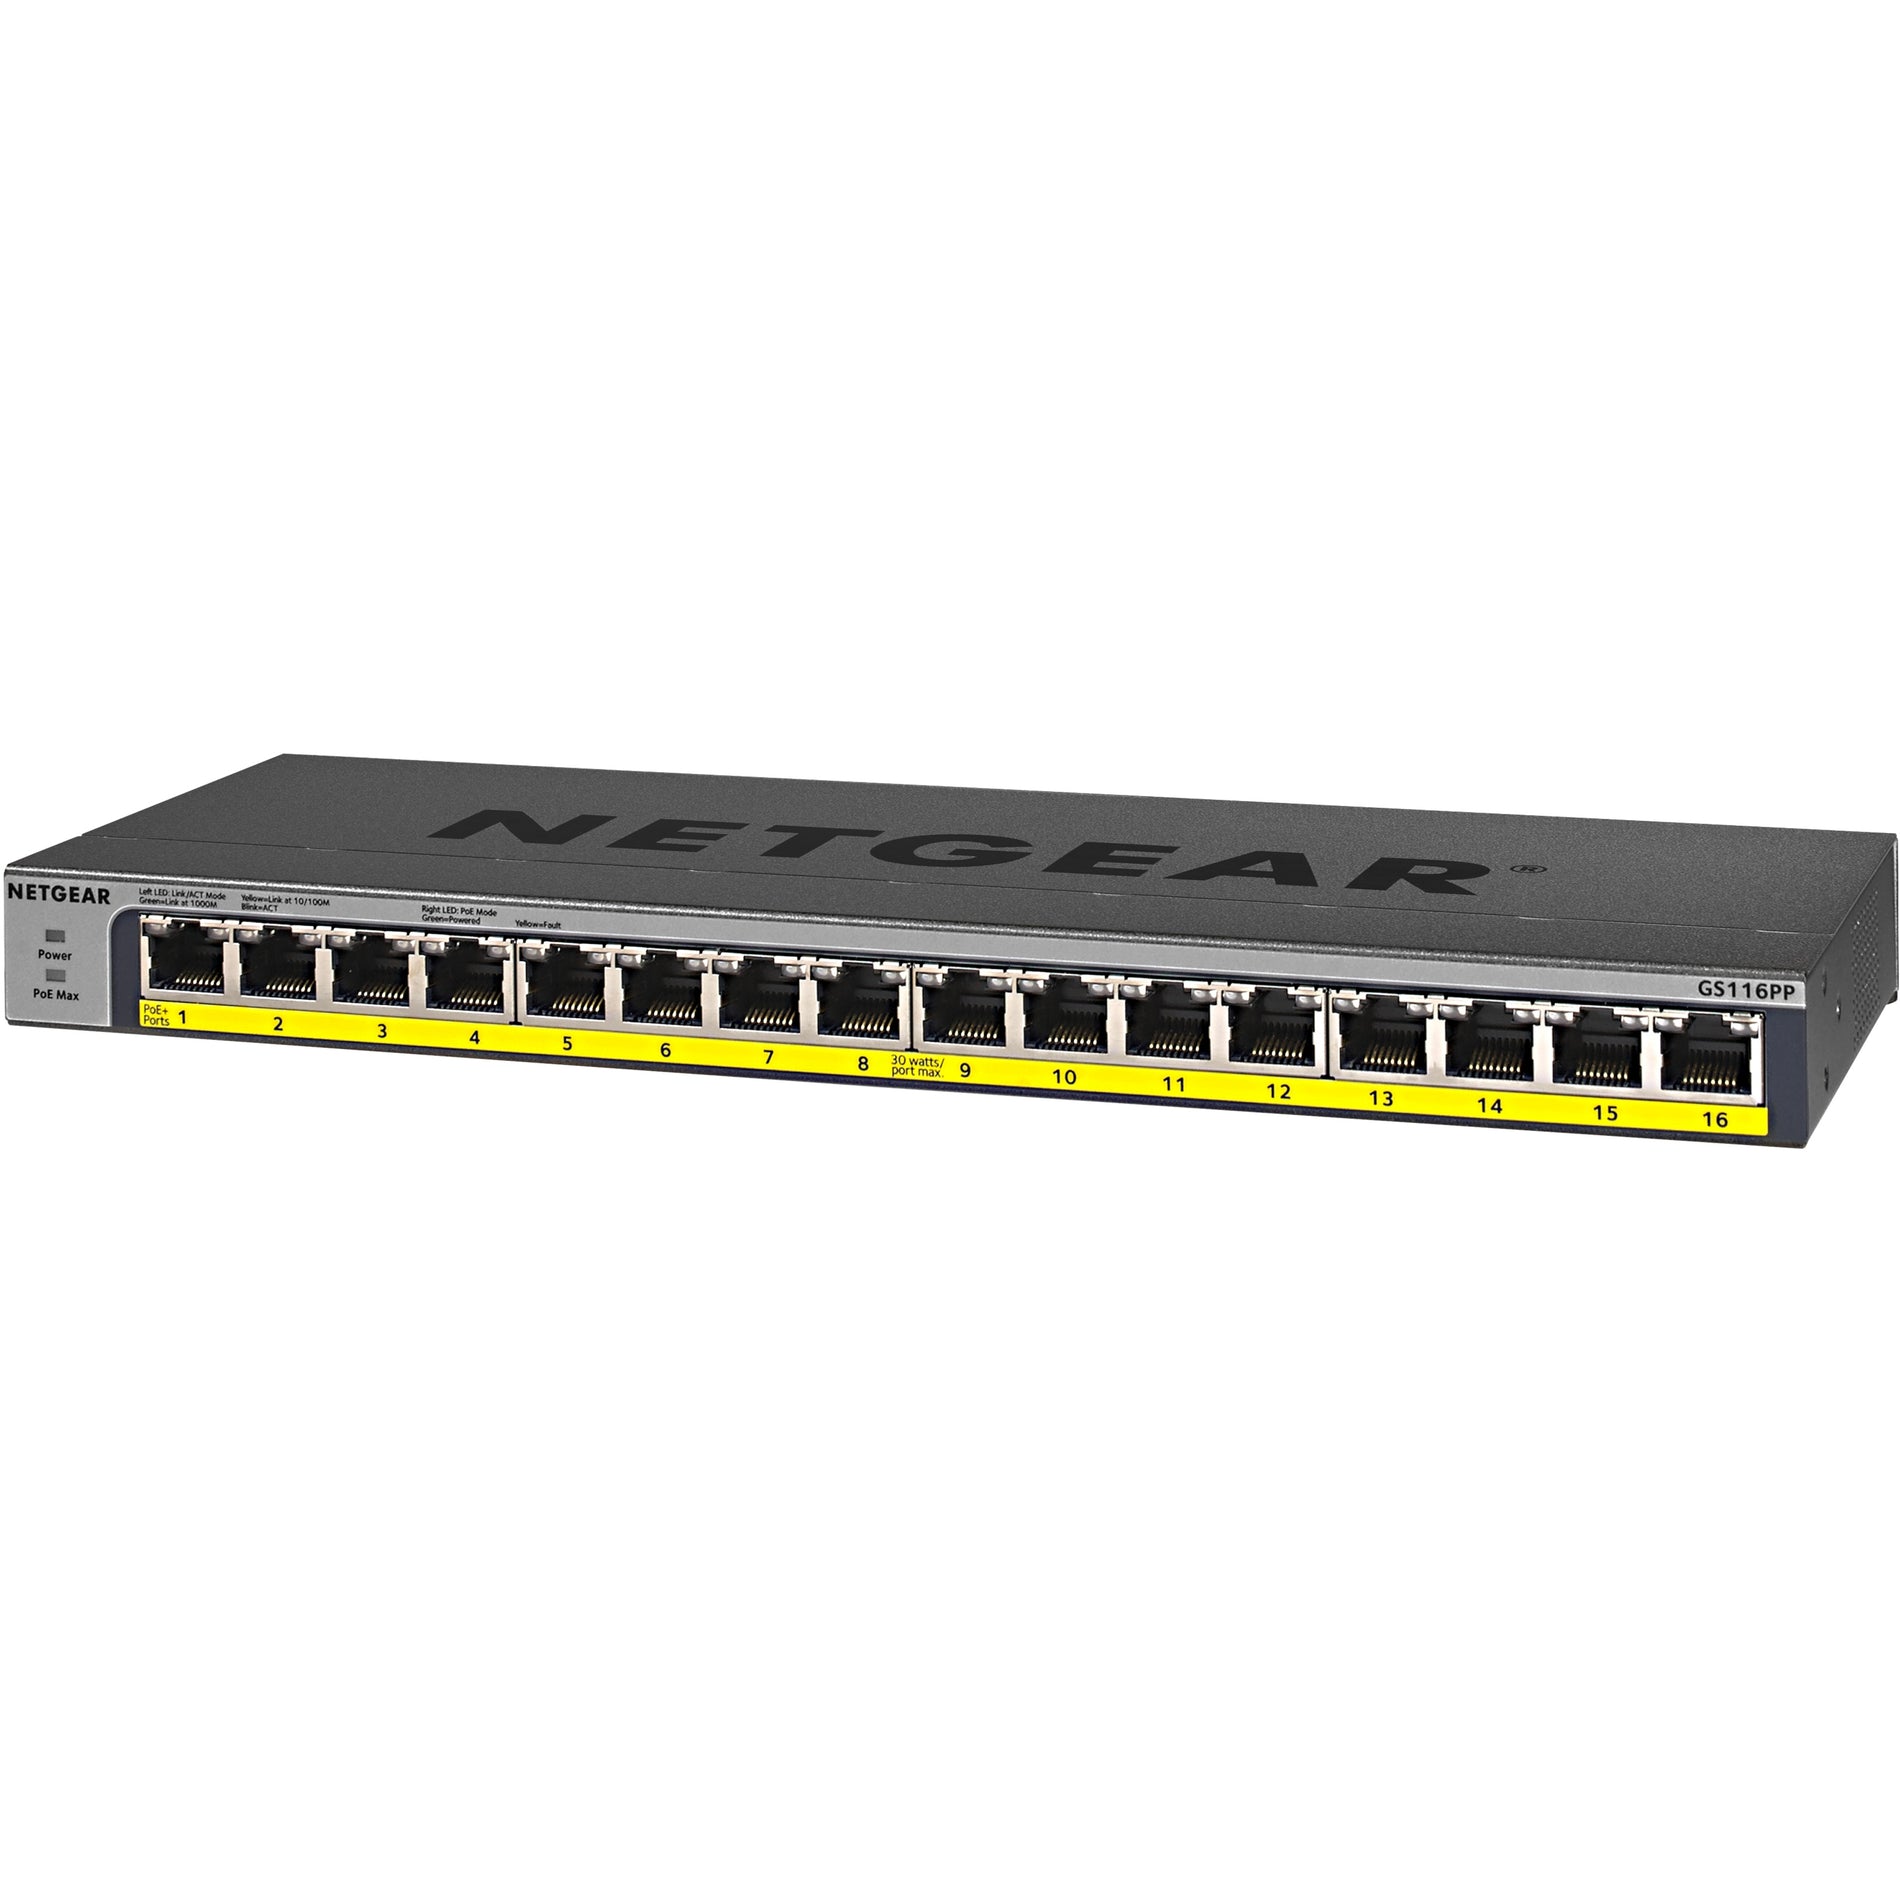 Netgear GS116PP-100NAS ProSafe 16-Port PoE/PoE+ Gigabit Ethernet Unmanaged Switch, 183W Power